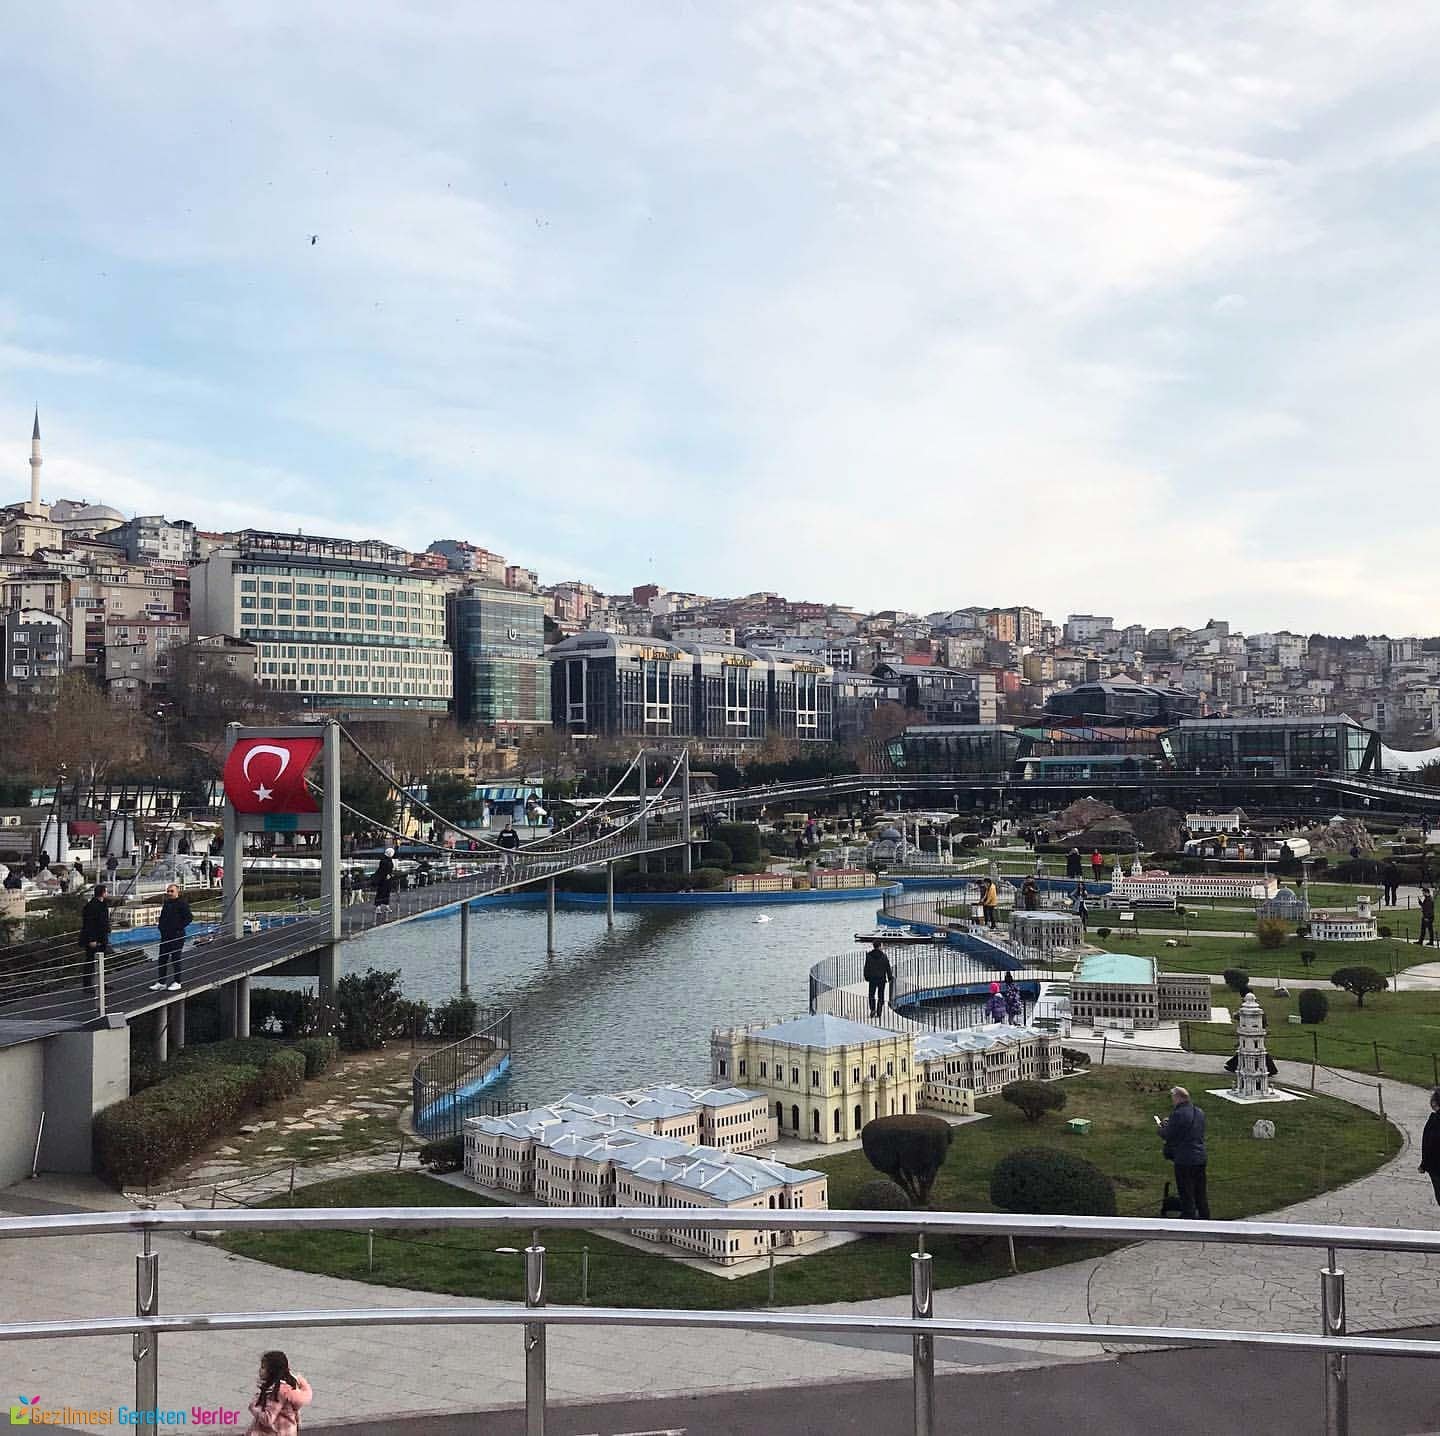 Miniatürk Park İstanbul